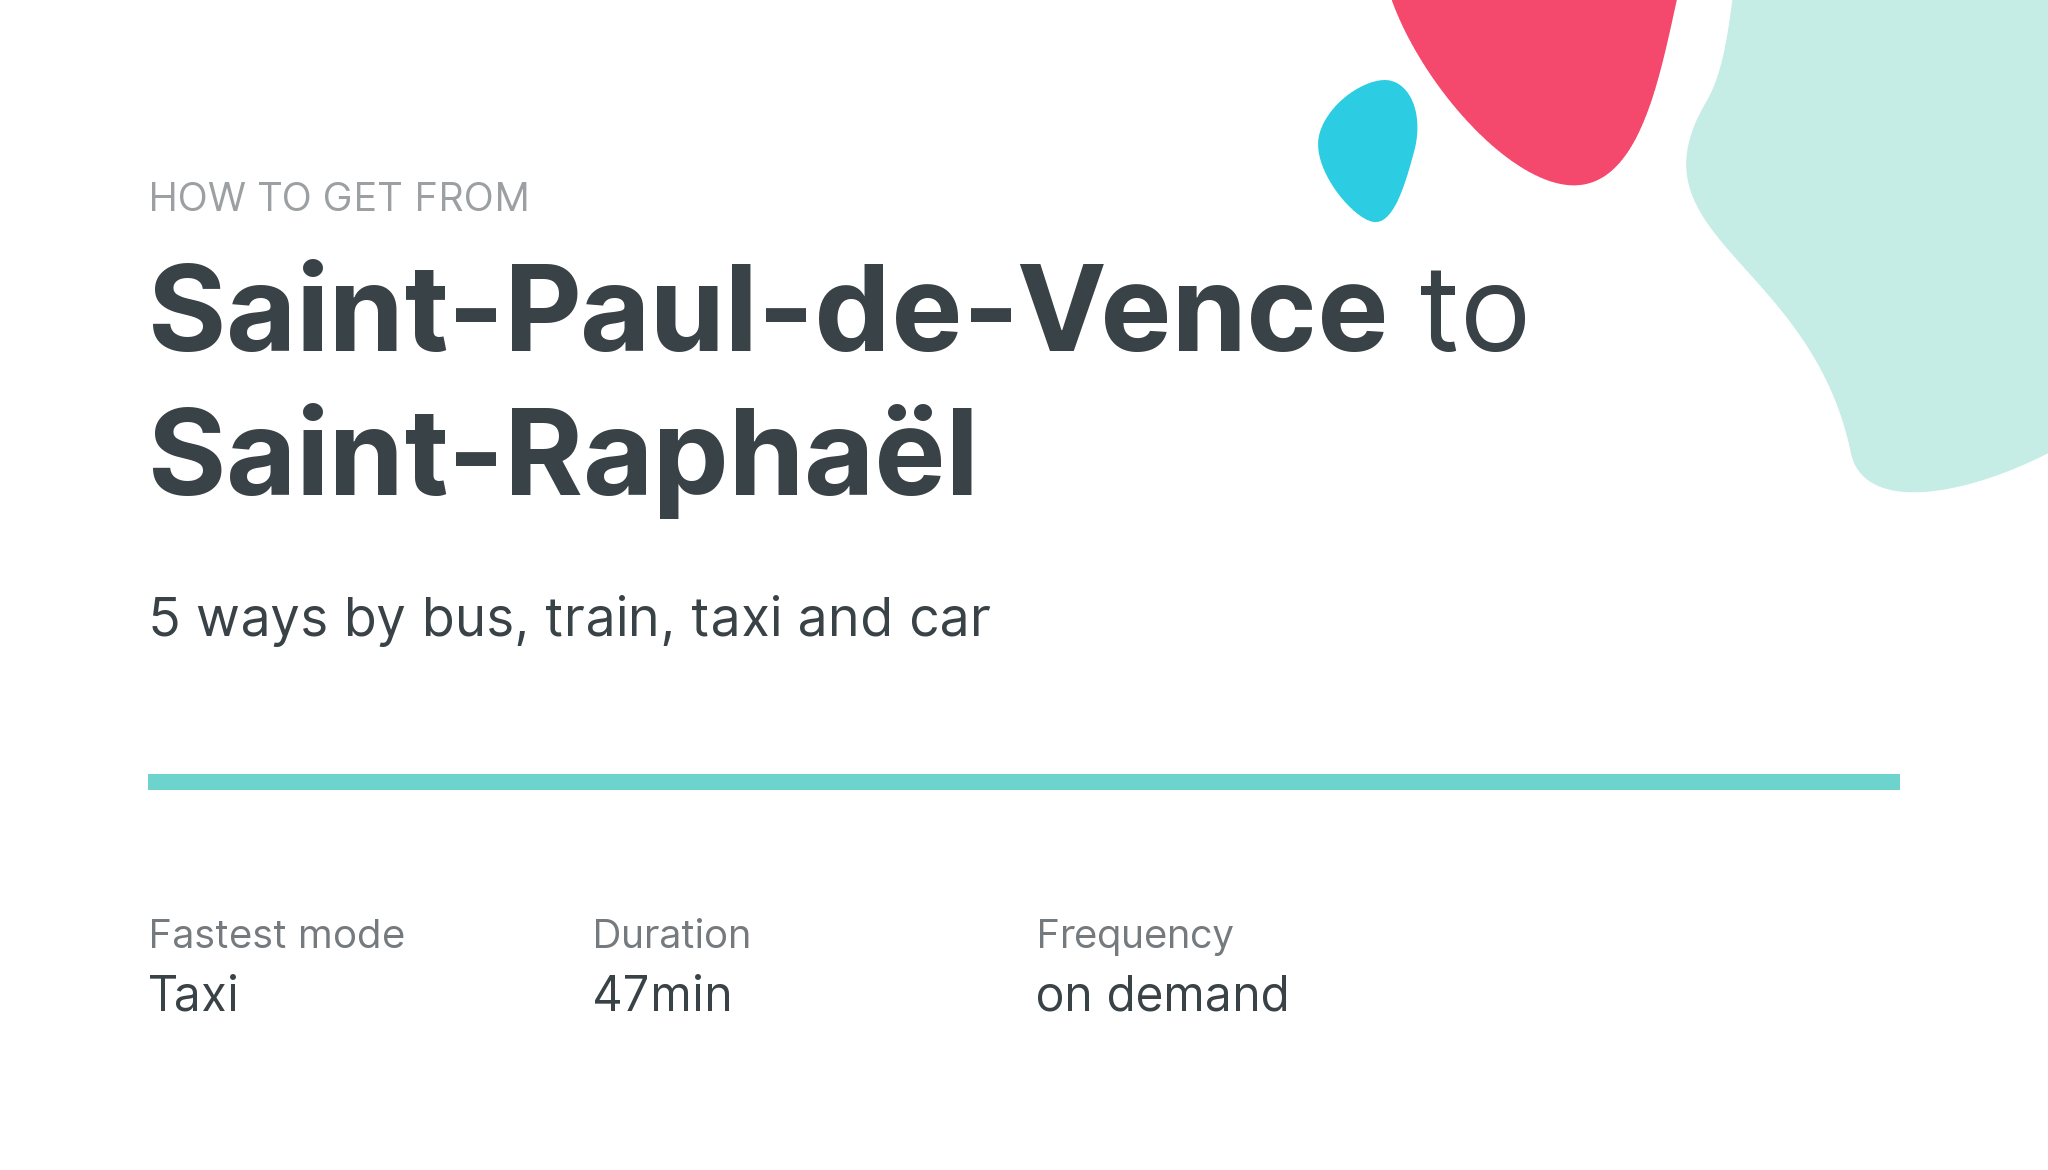 How do I get from Saint-Paul-de-Vence to Saint-Raphaël